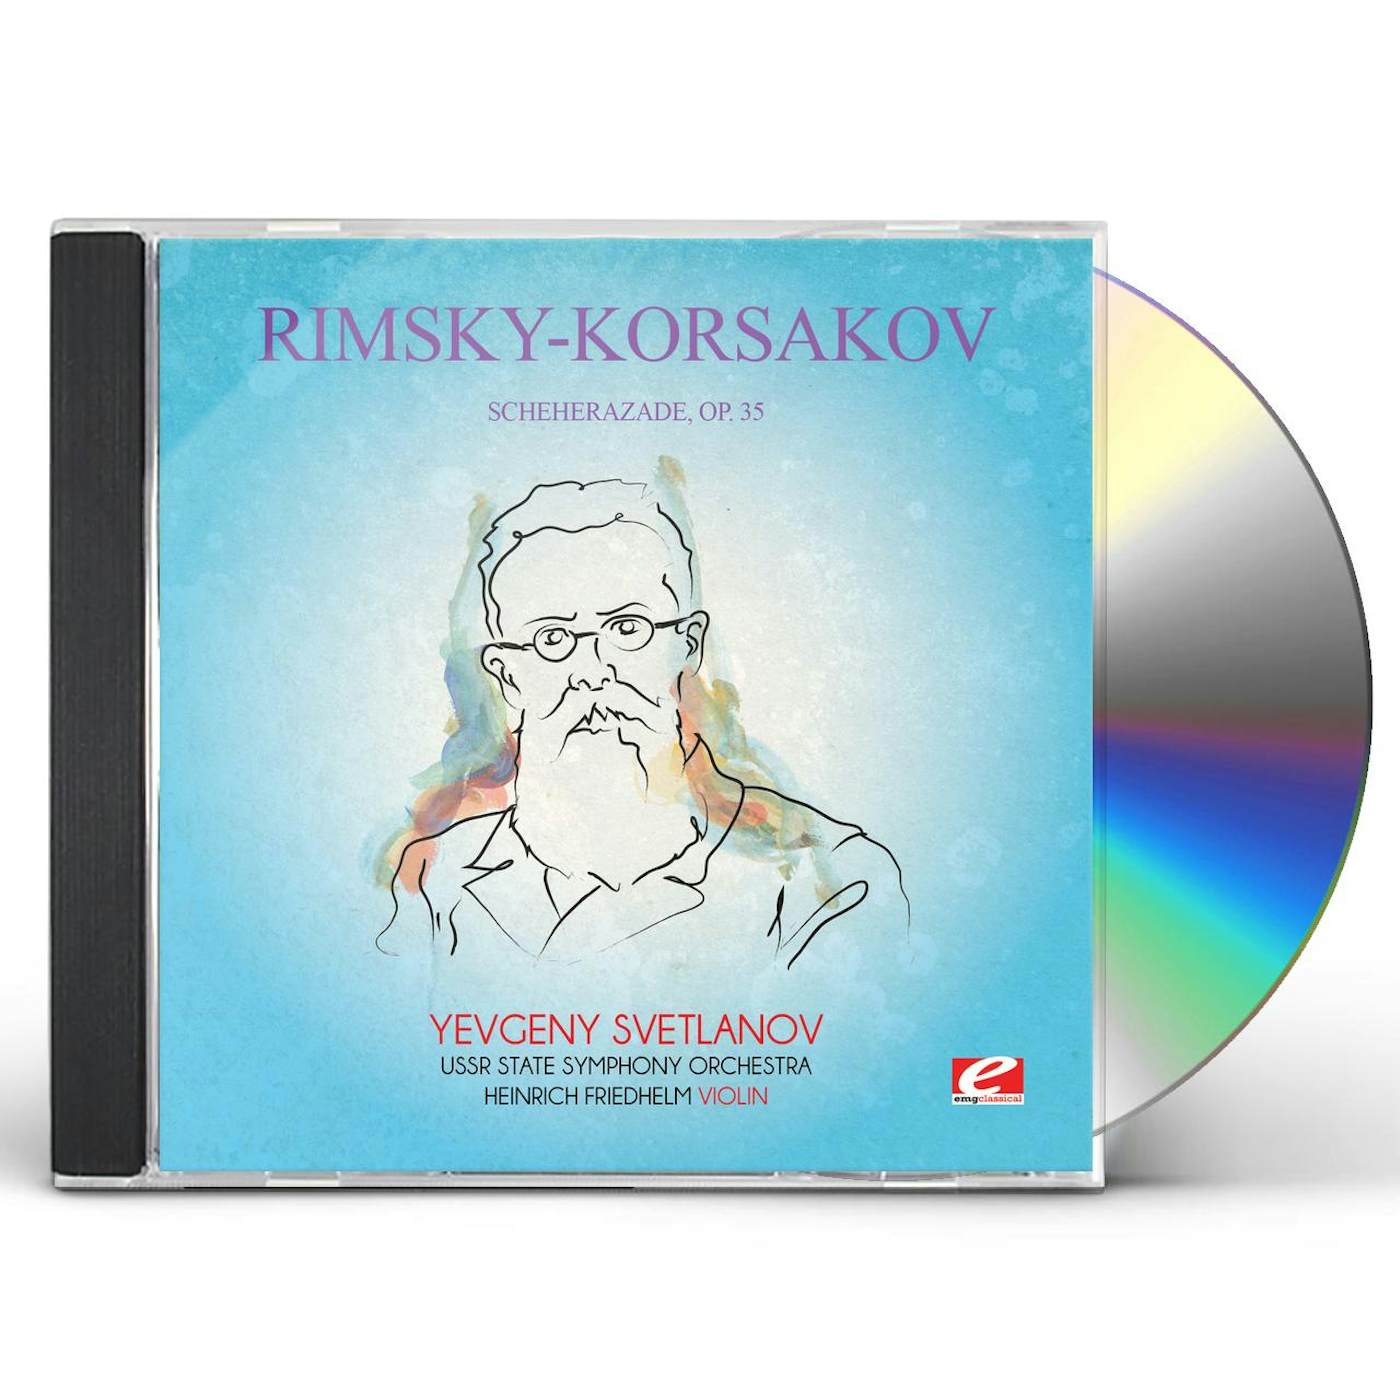 Rimsky-Korsakov SCHEHERAZADE 35 CD